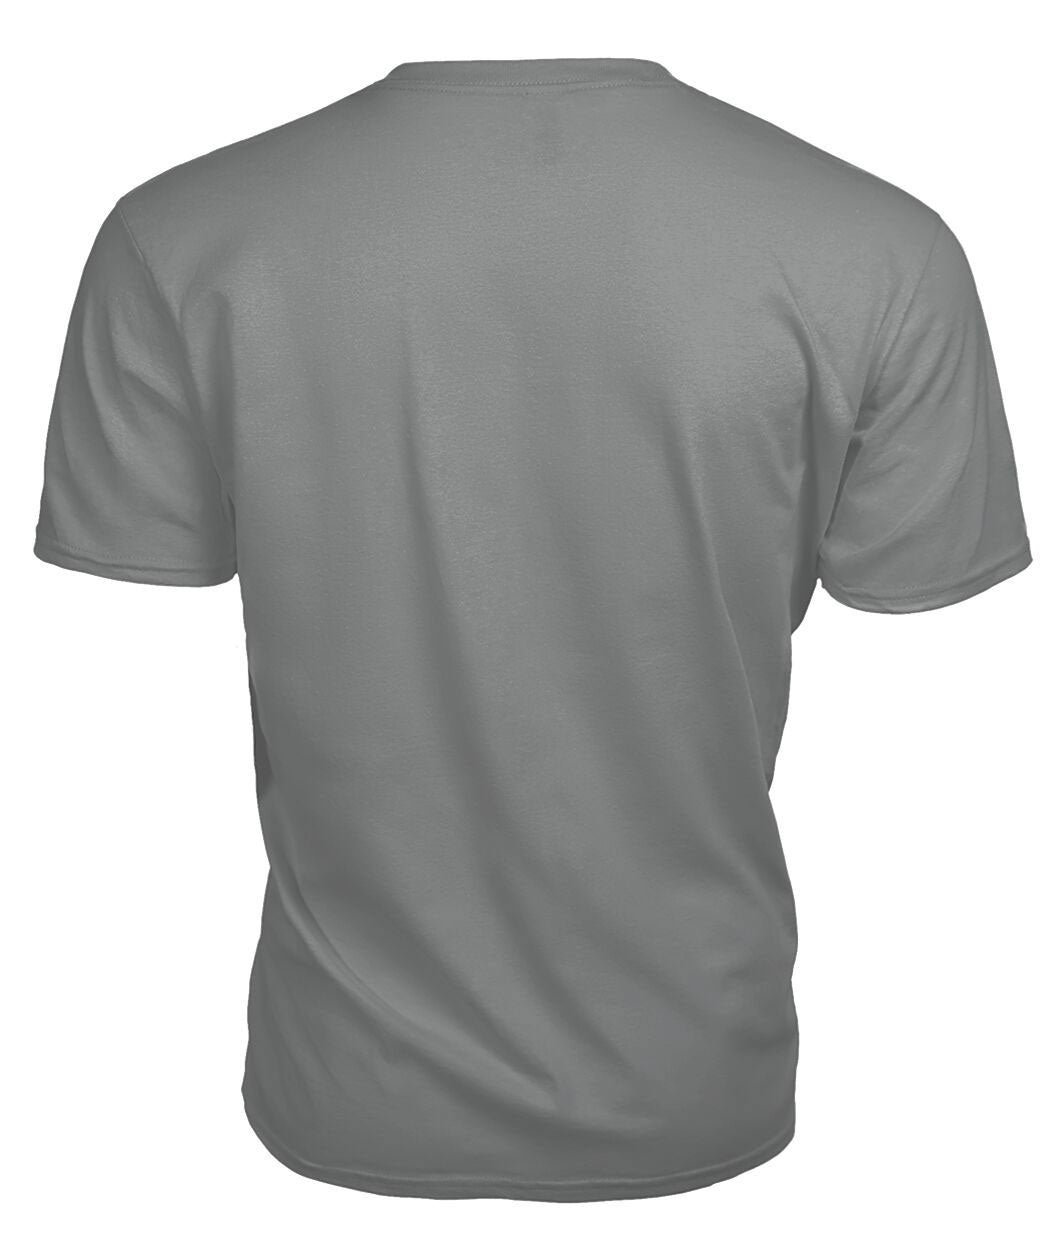 Houston Tartan Crest 2D T-shirt - Blood Runs Through My Veins Style